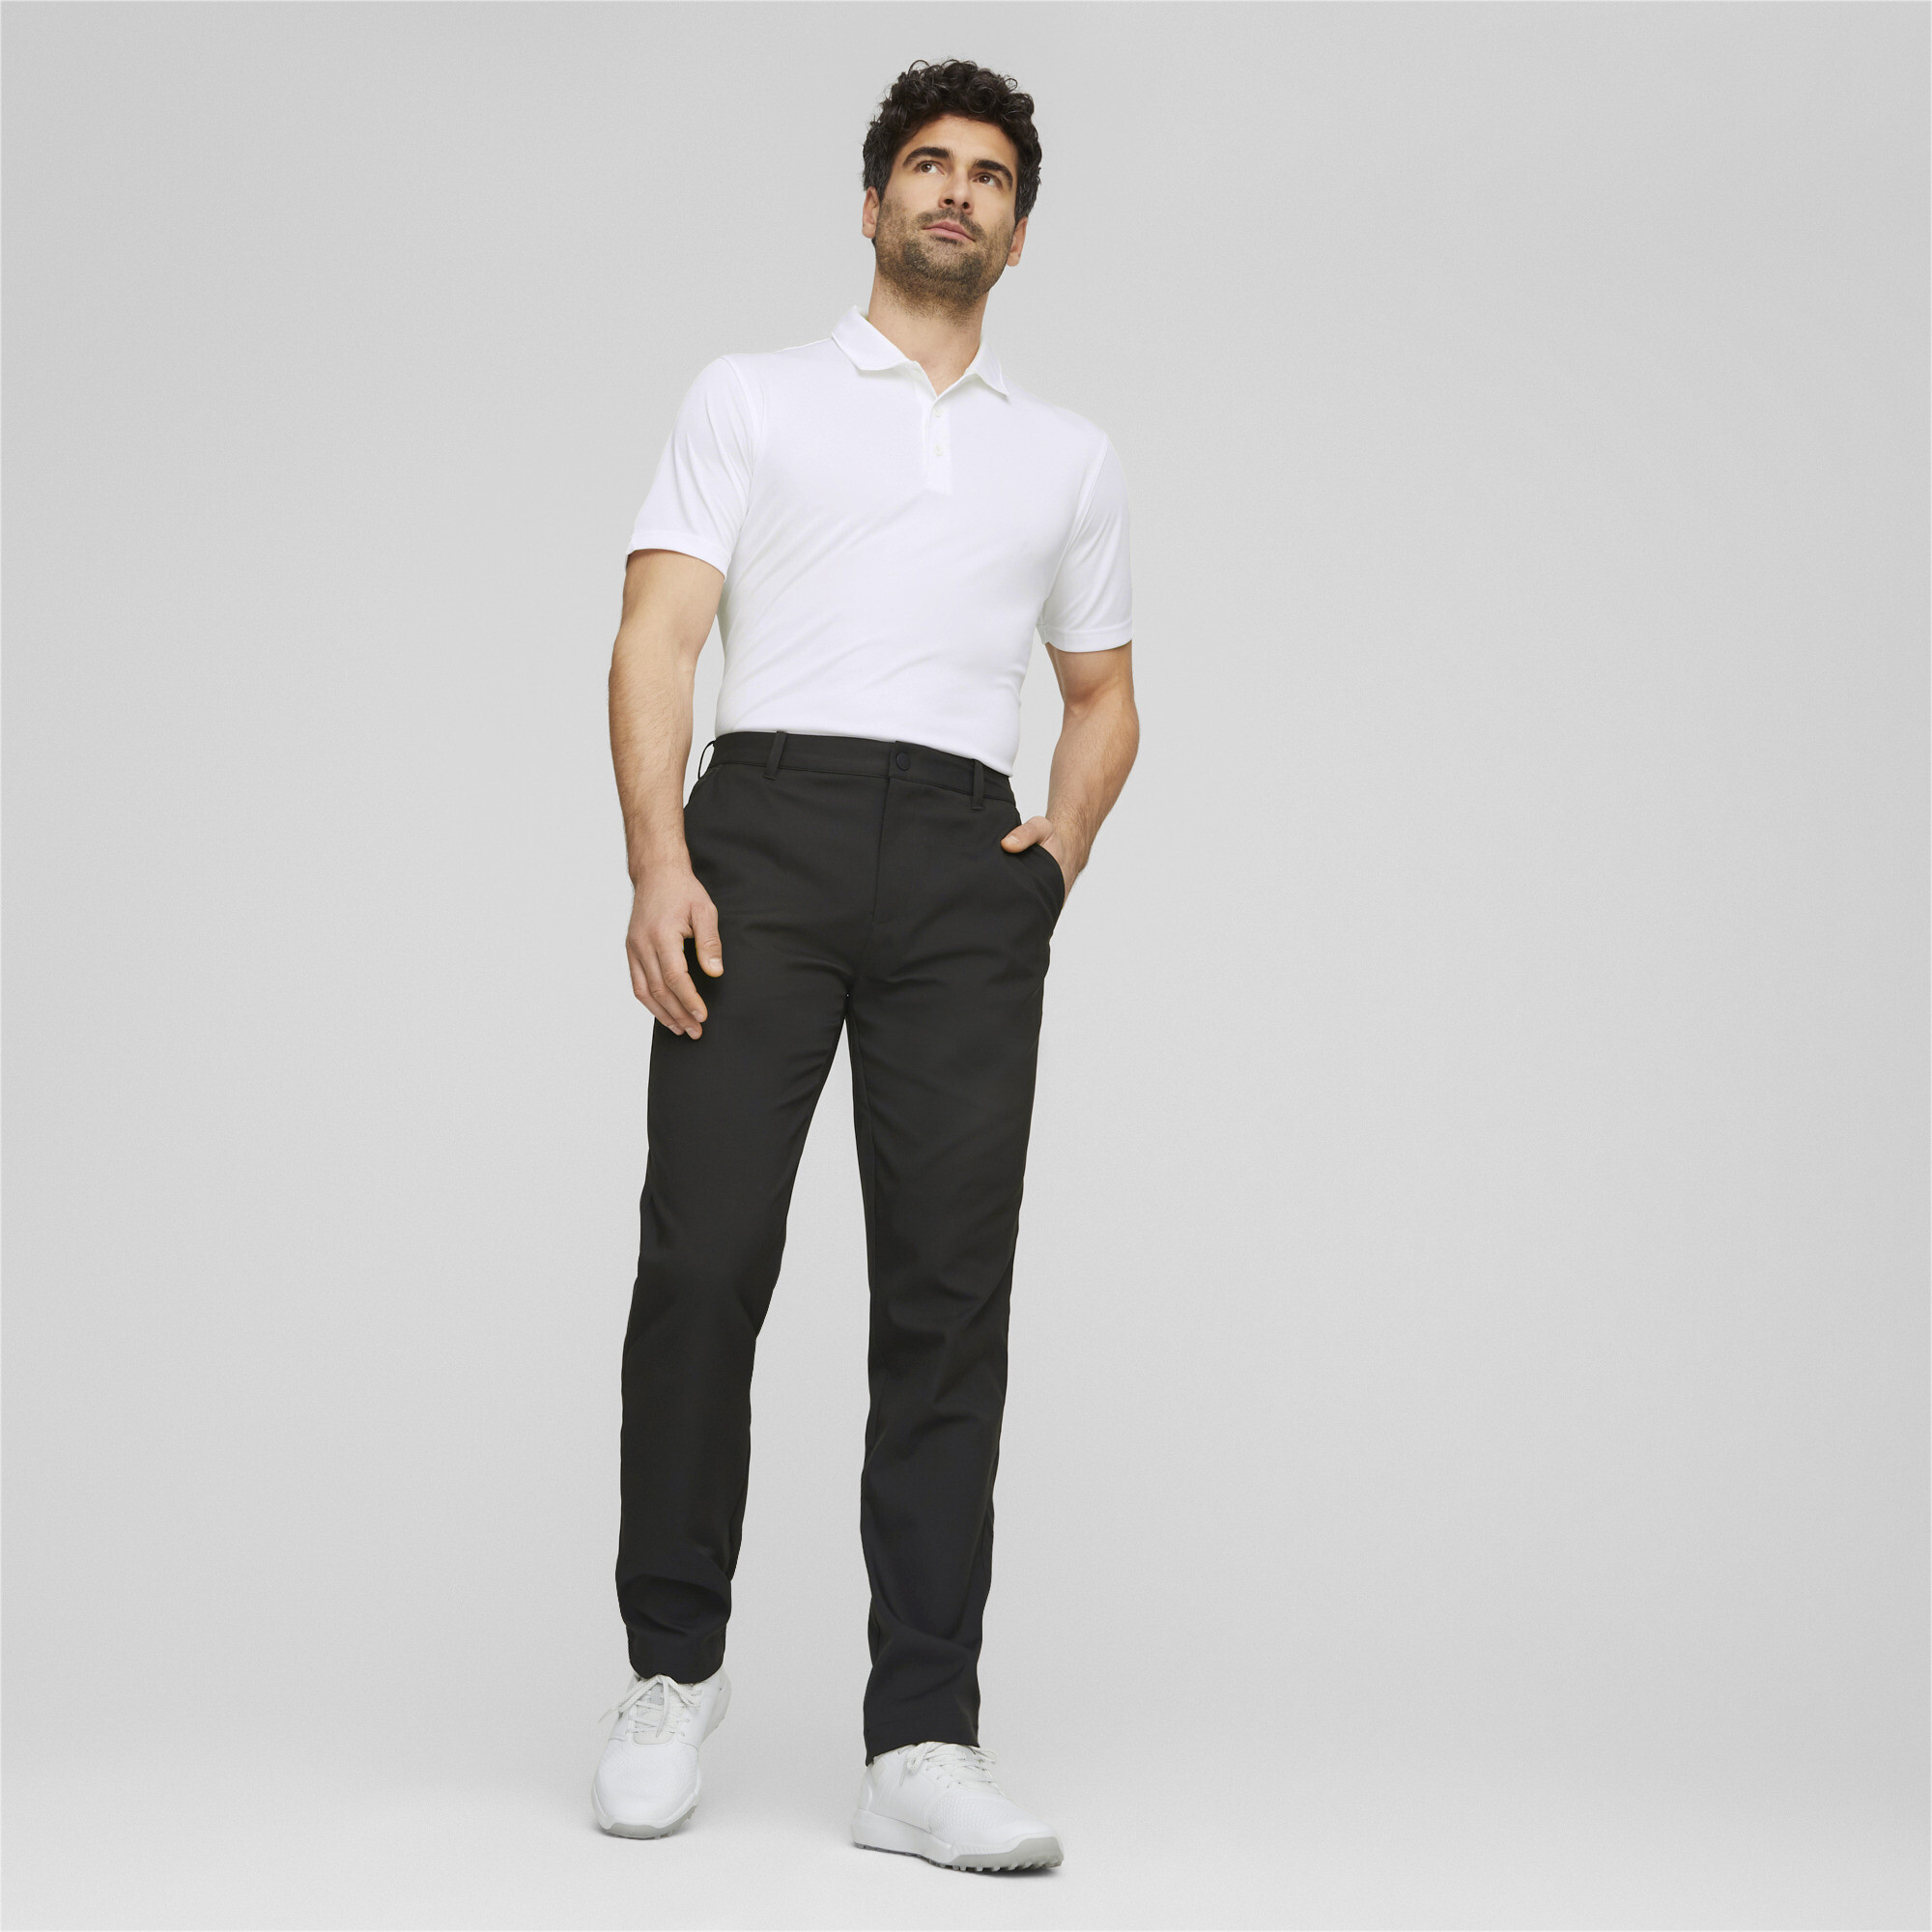 Men's Puma Dealer Golf Pants, Black, Size 36/36, Clothing